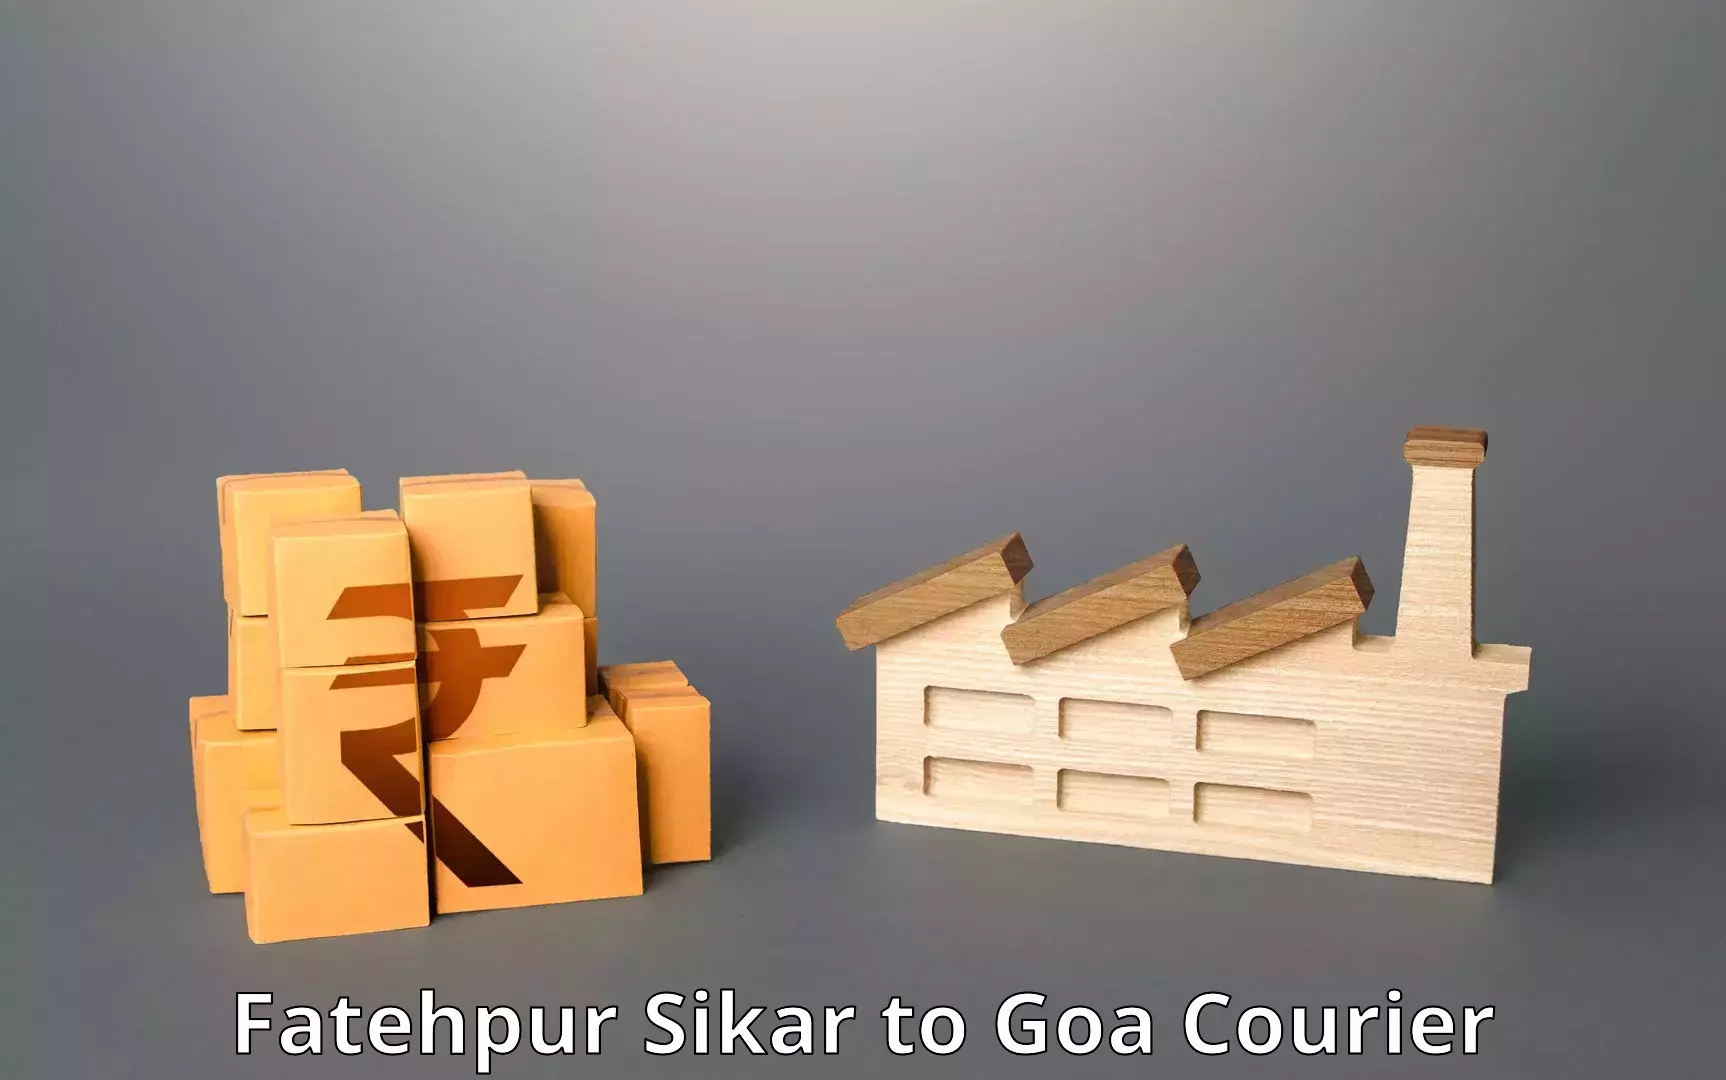 High-performance logistics Fatehpur Sikar to Goa University